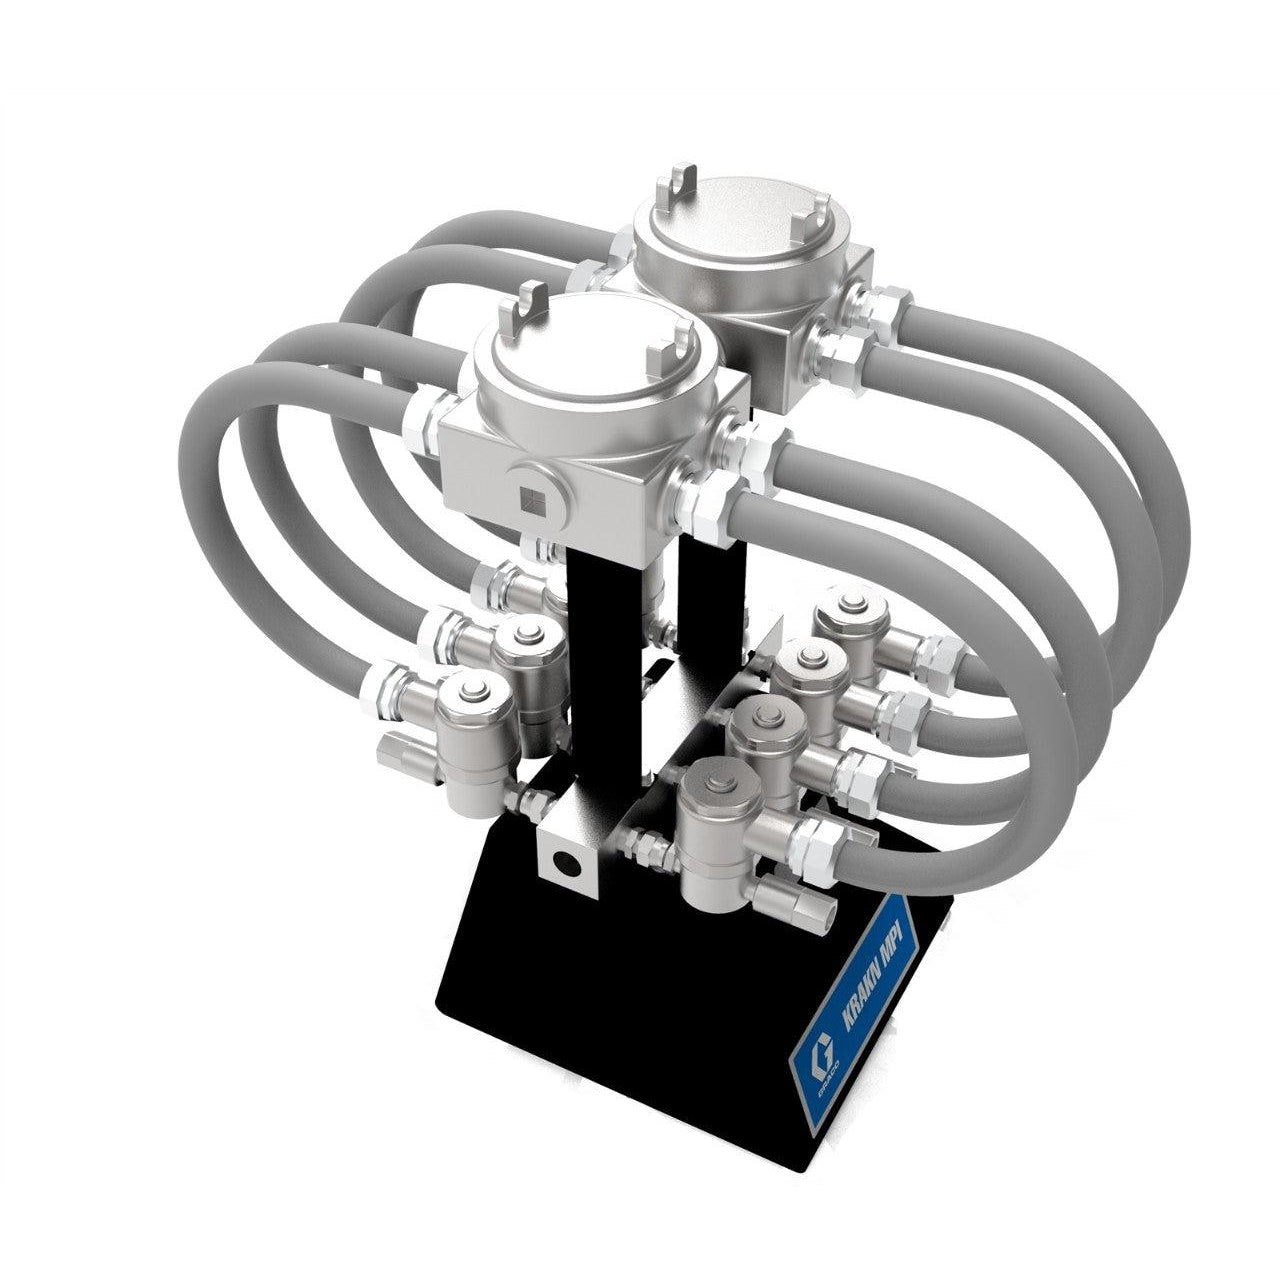 4 valve KRAKN MPI fluid manifold assembly for General Purpose use